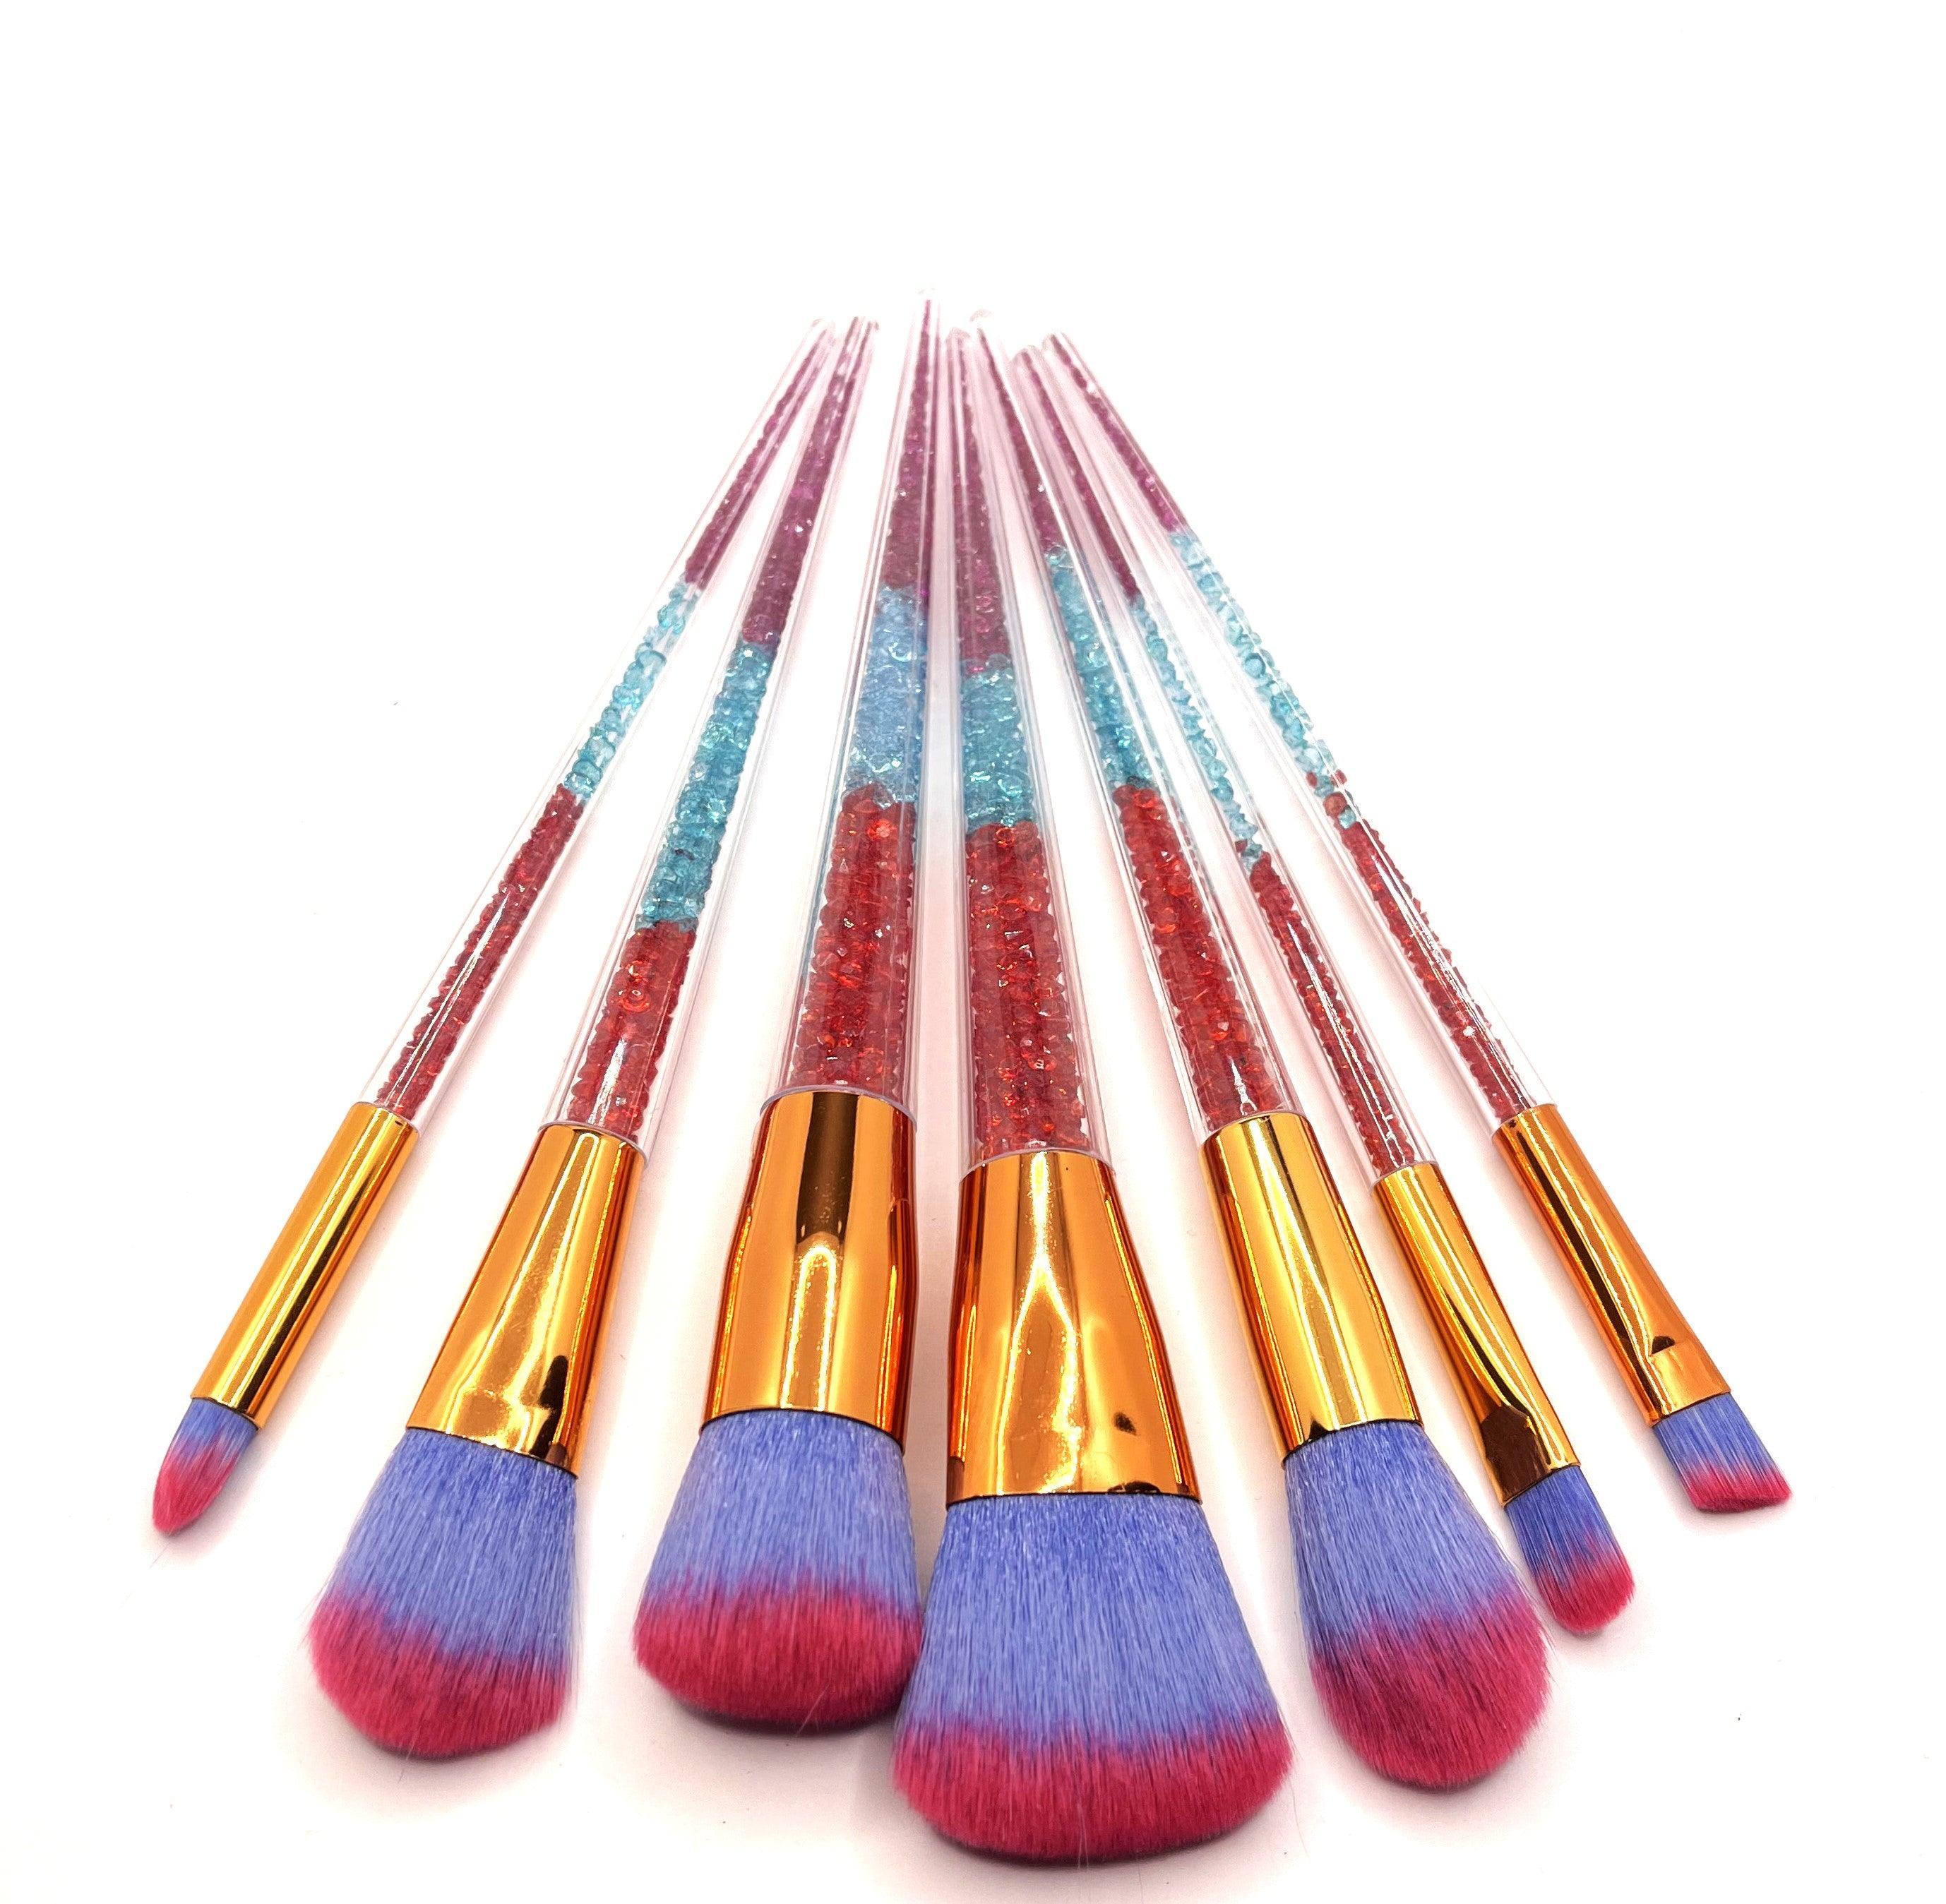 7 Pc Make Up Brush Set - XD21